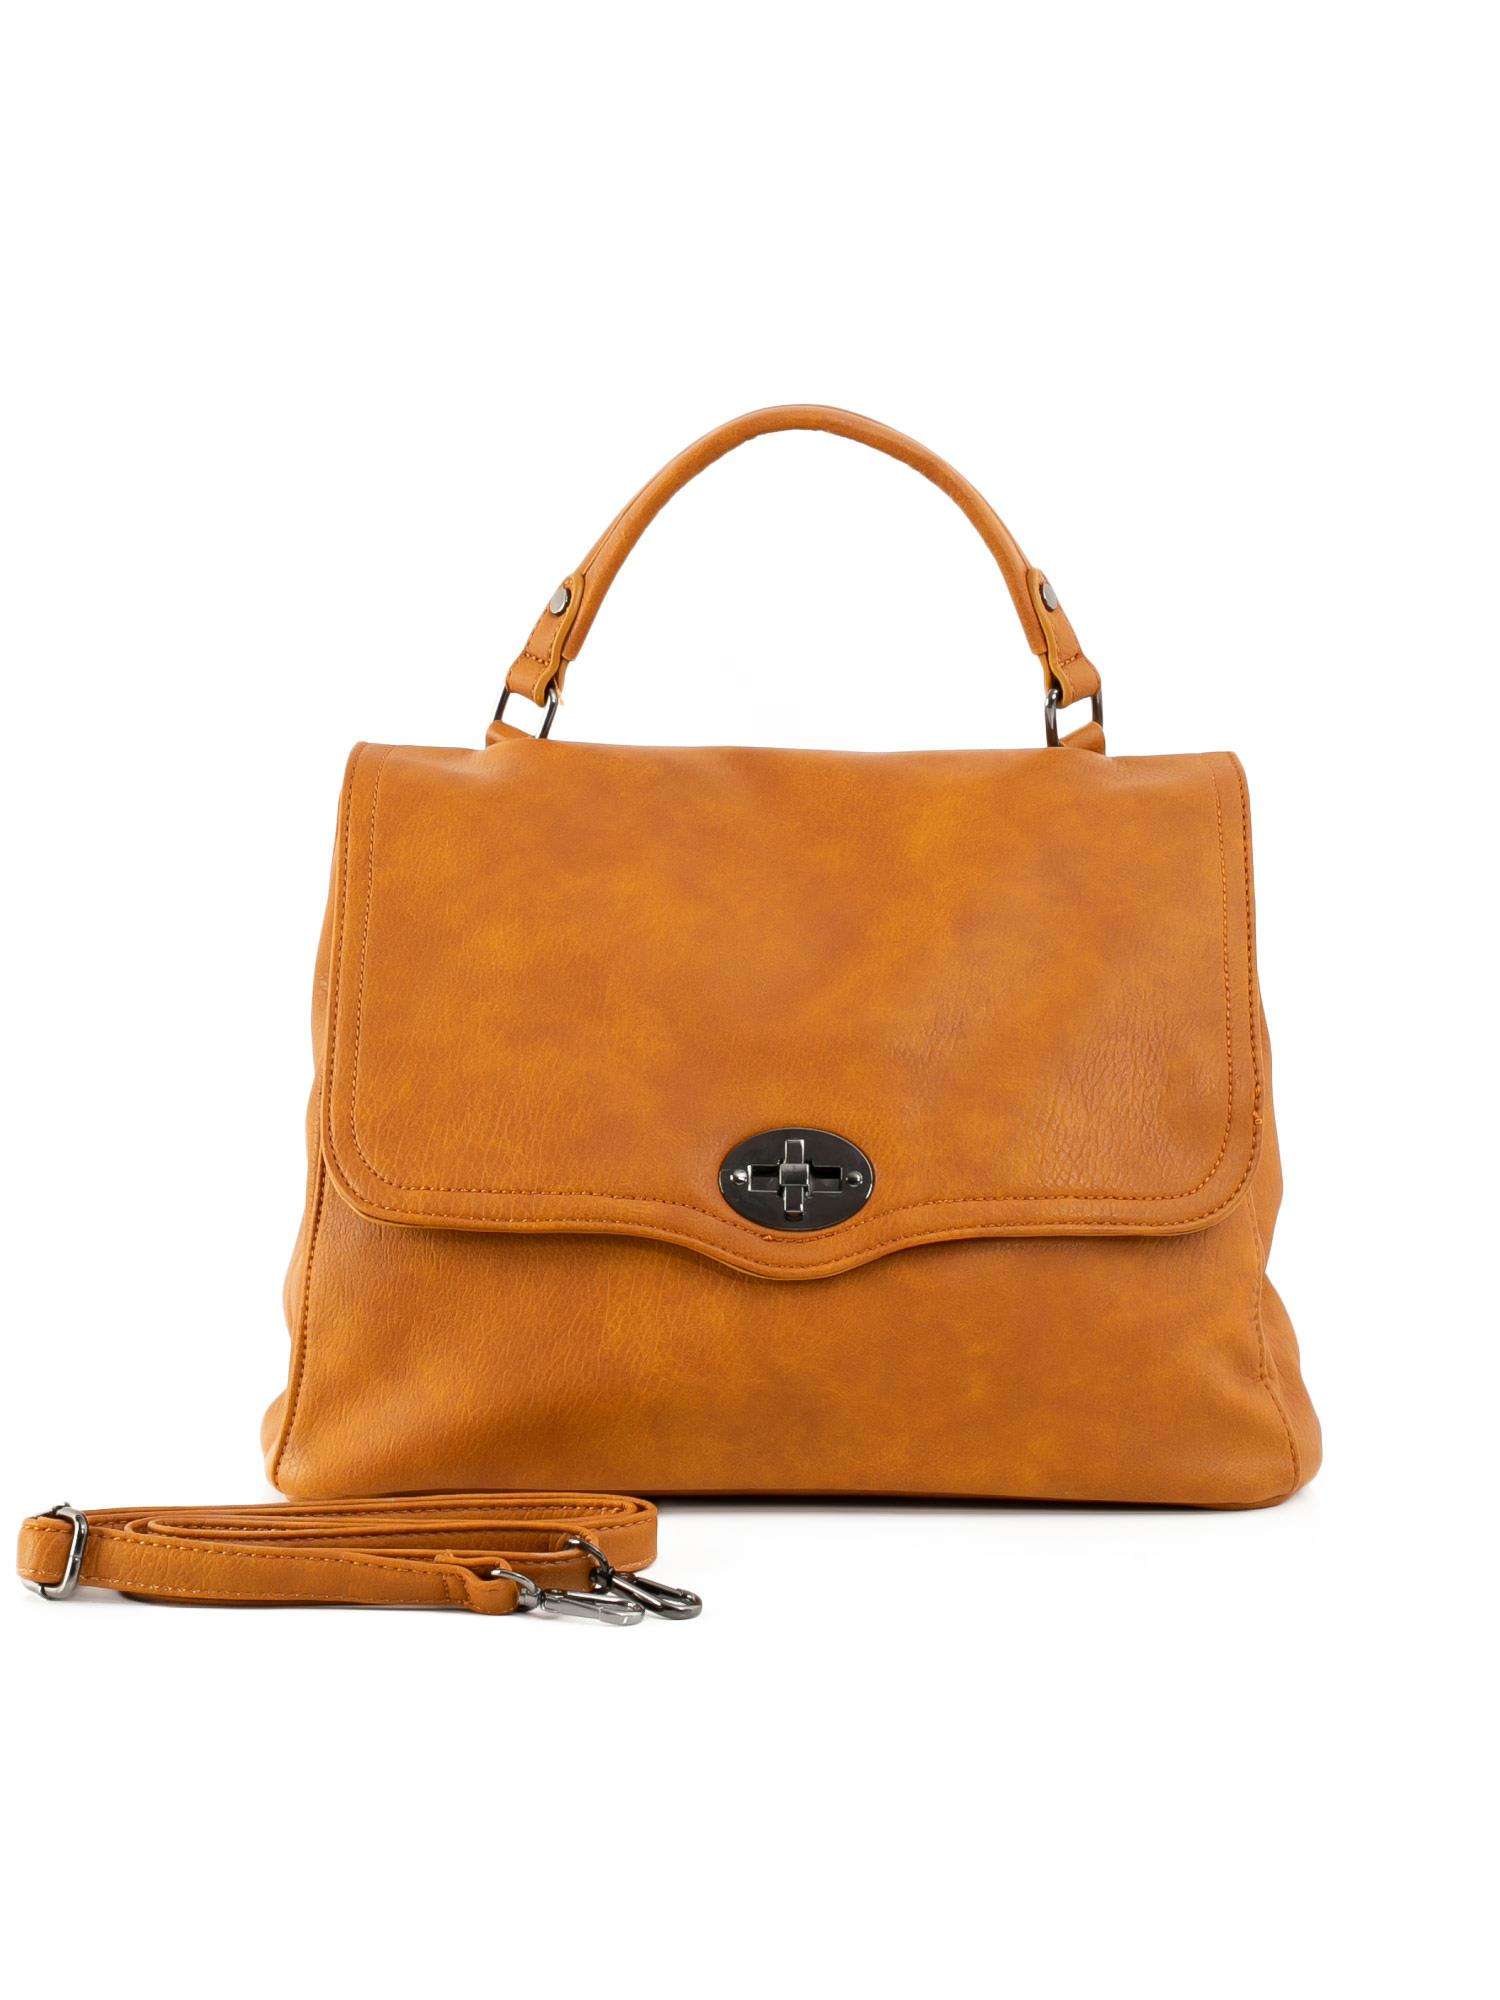 Hnedá dámska kabelka s odnímateľným remienkom